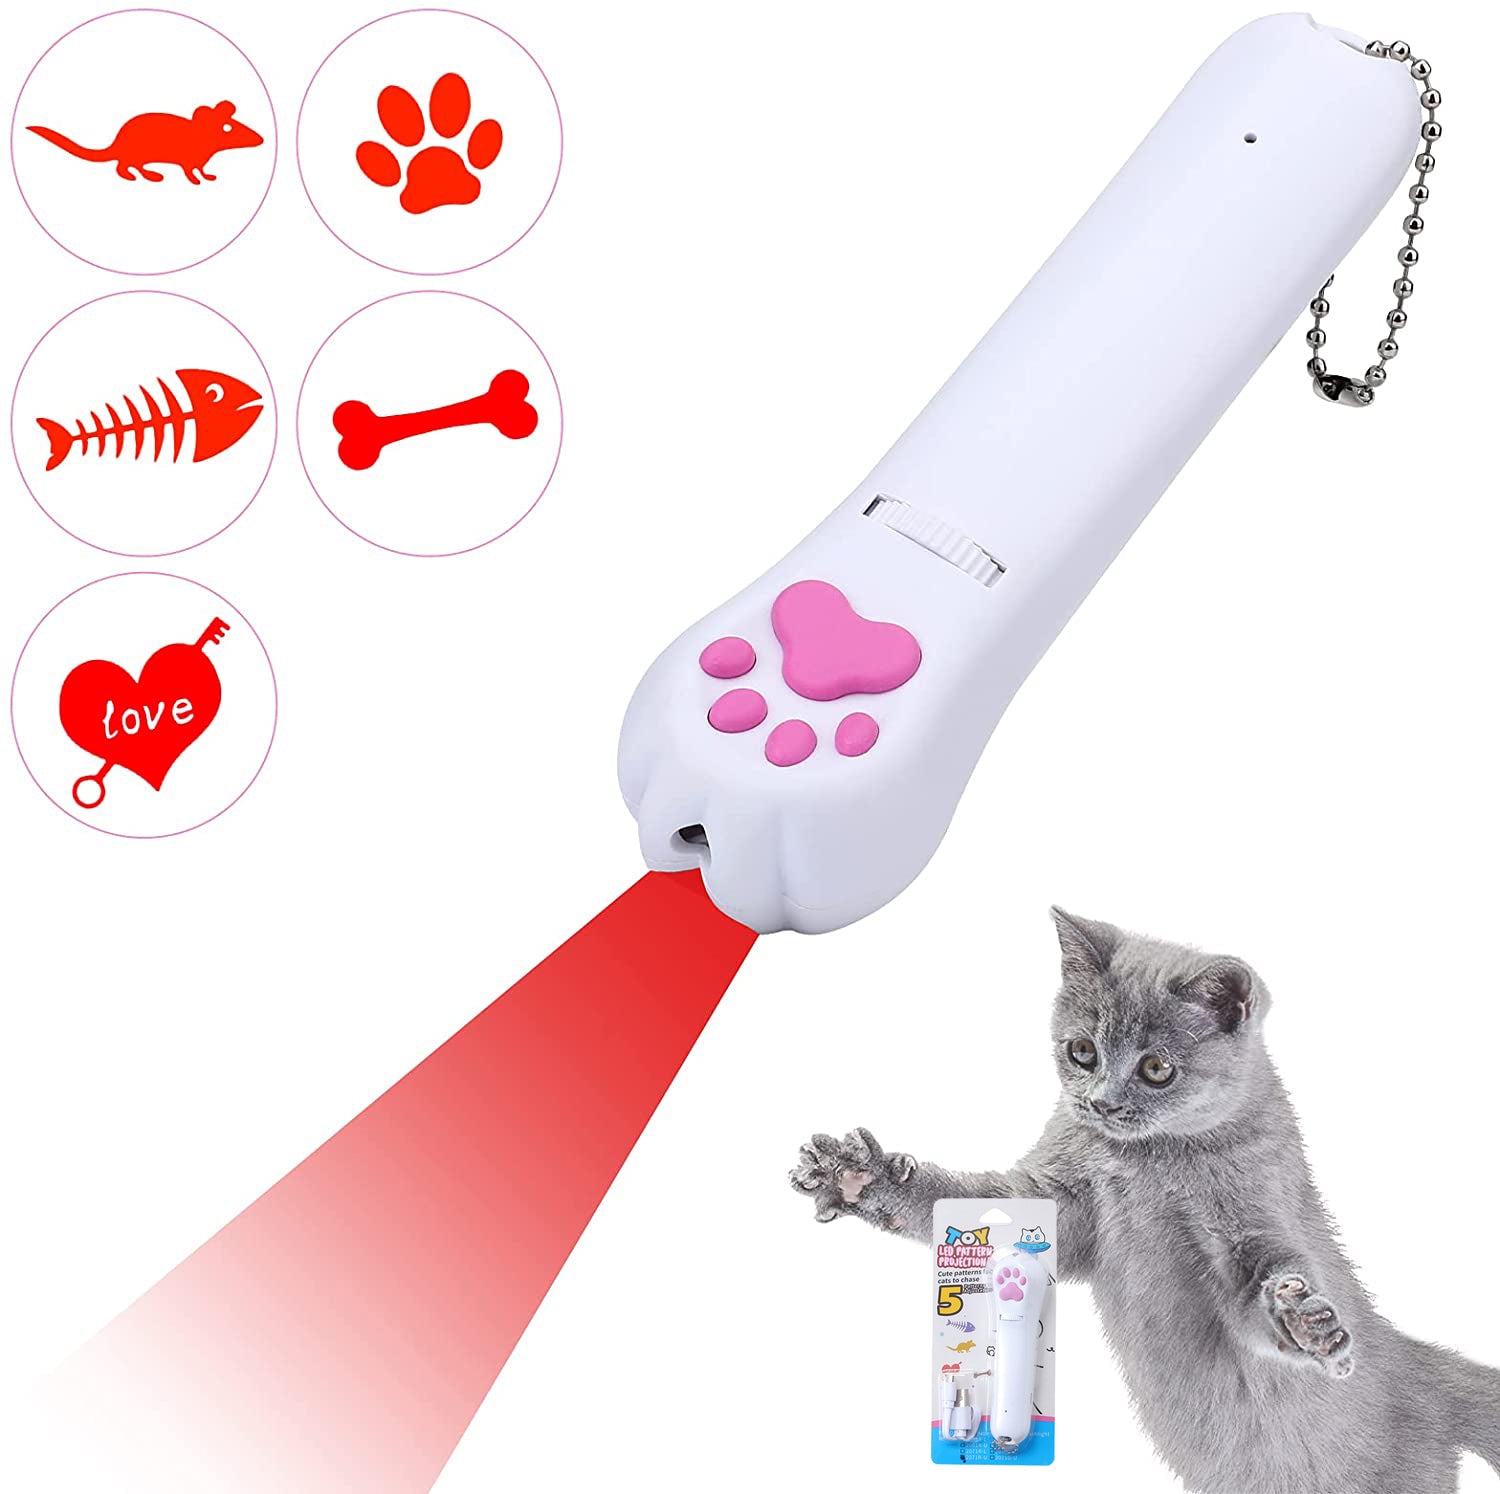 Led light pointer pet toy